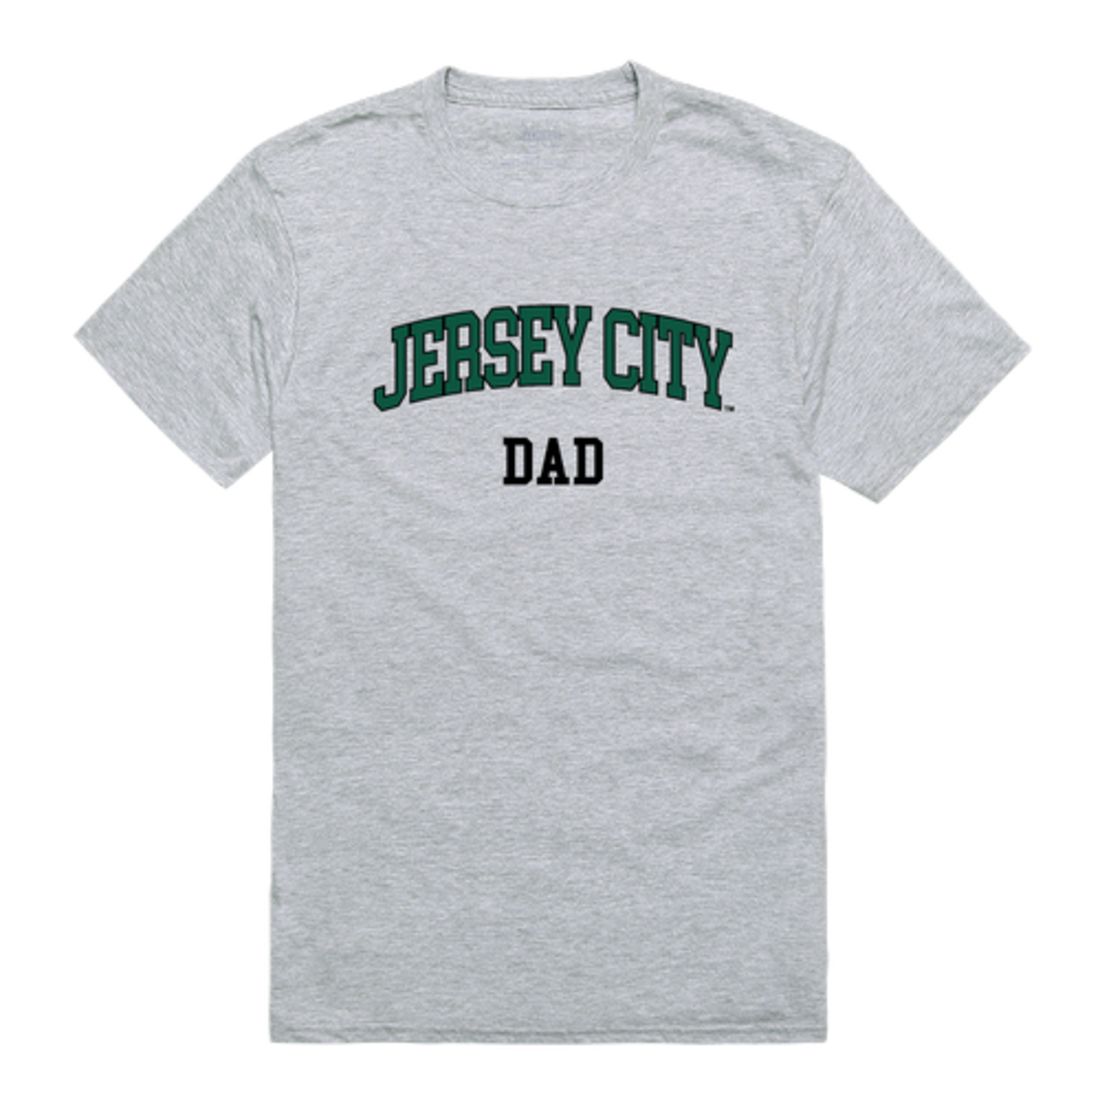 New Jersey City University Knights Dad T-Shirt